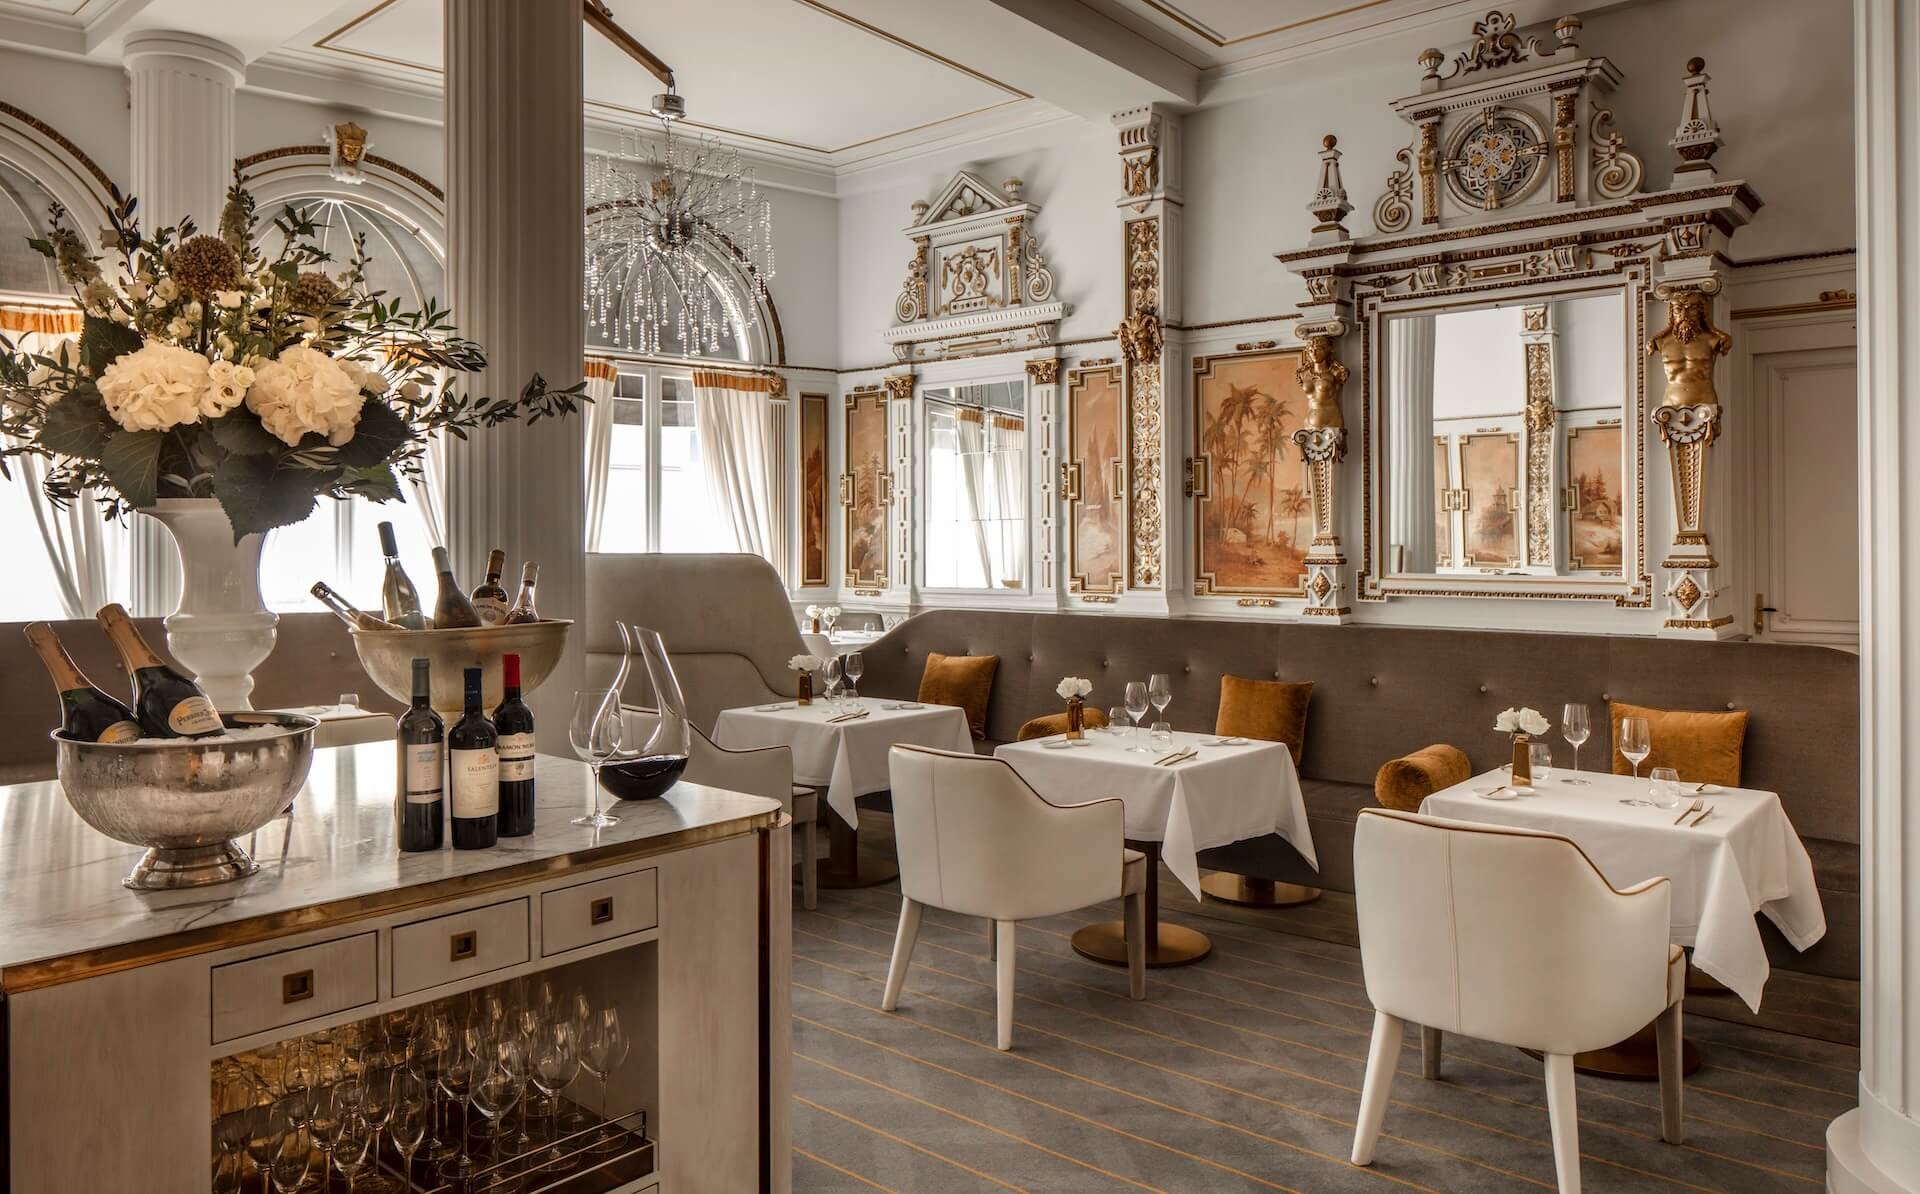 Anantara_Grand_Hotel_Krasnapolsky_Amsterdam_Restaurant_Gastronomy_The_White_Room_wide_shot.jpeg